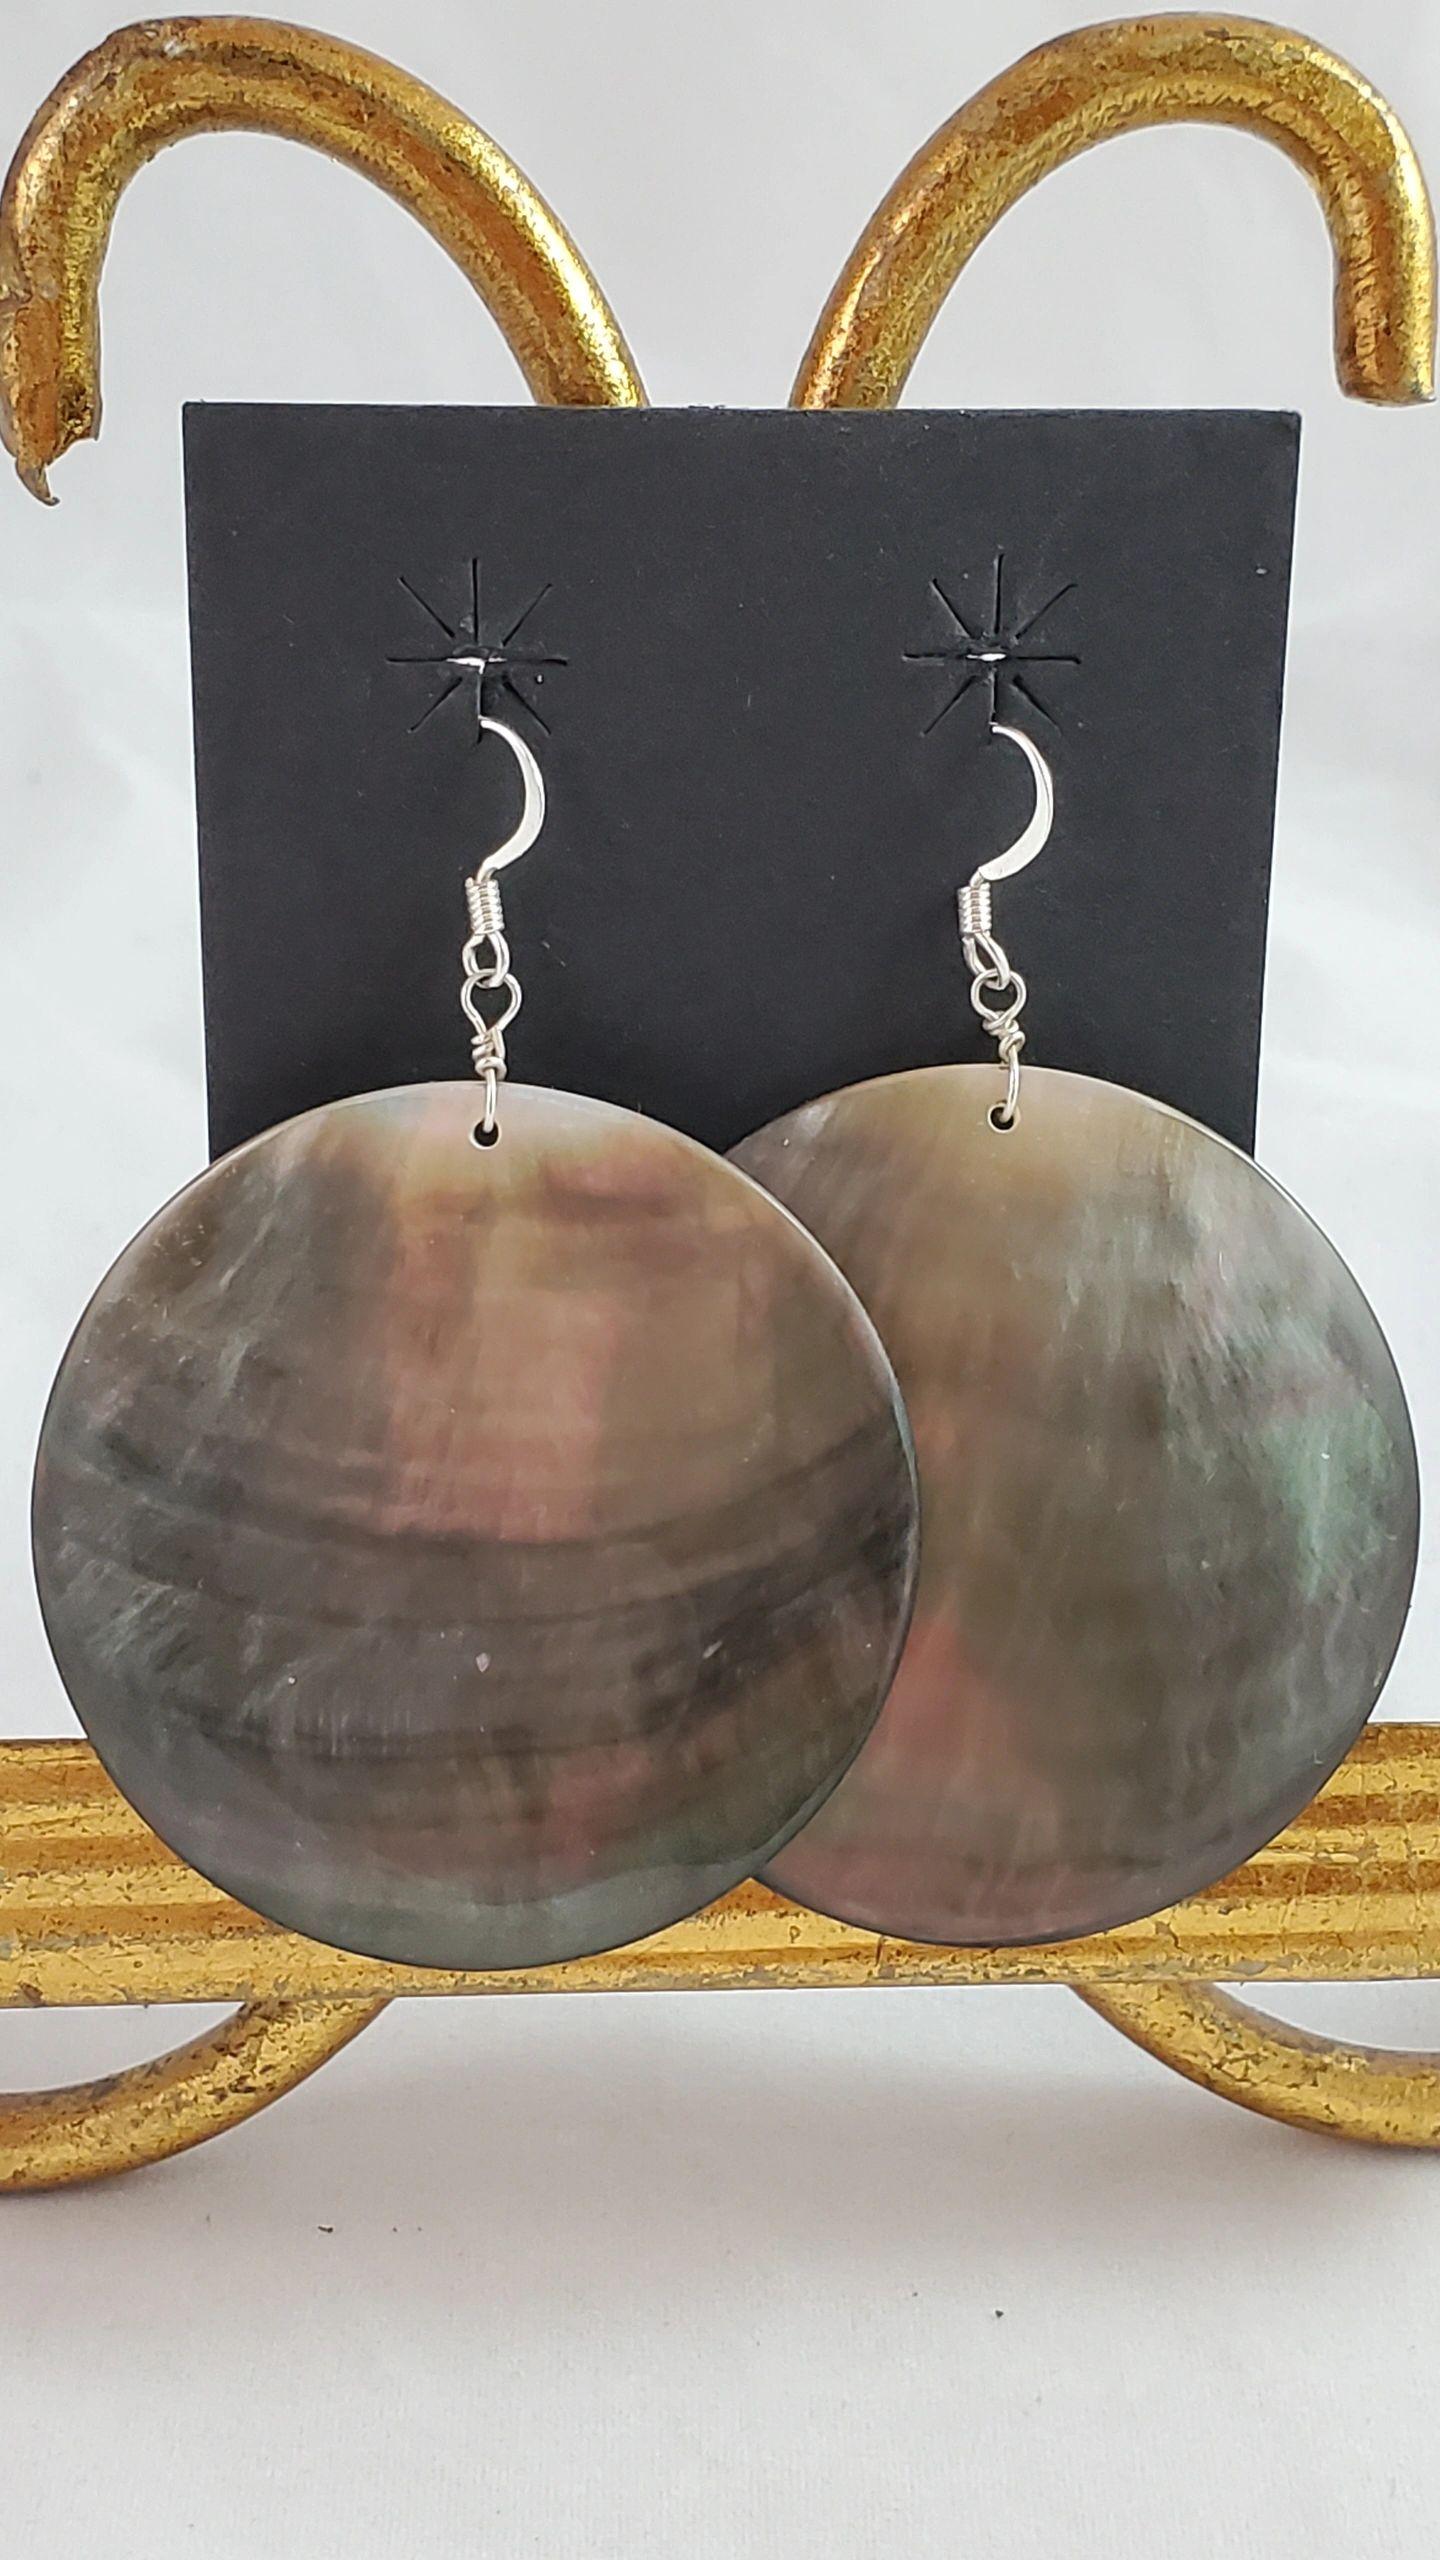 2" Abalone Shell earrings - Albuquerque Pawn Shop